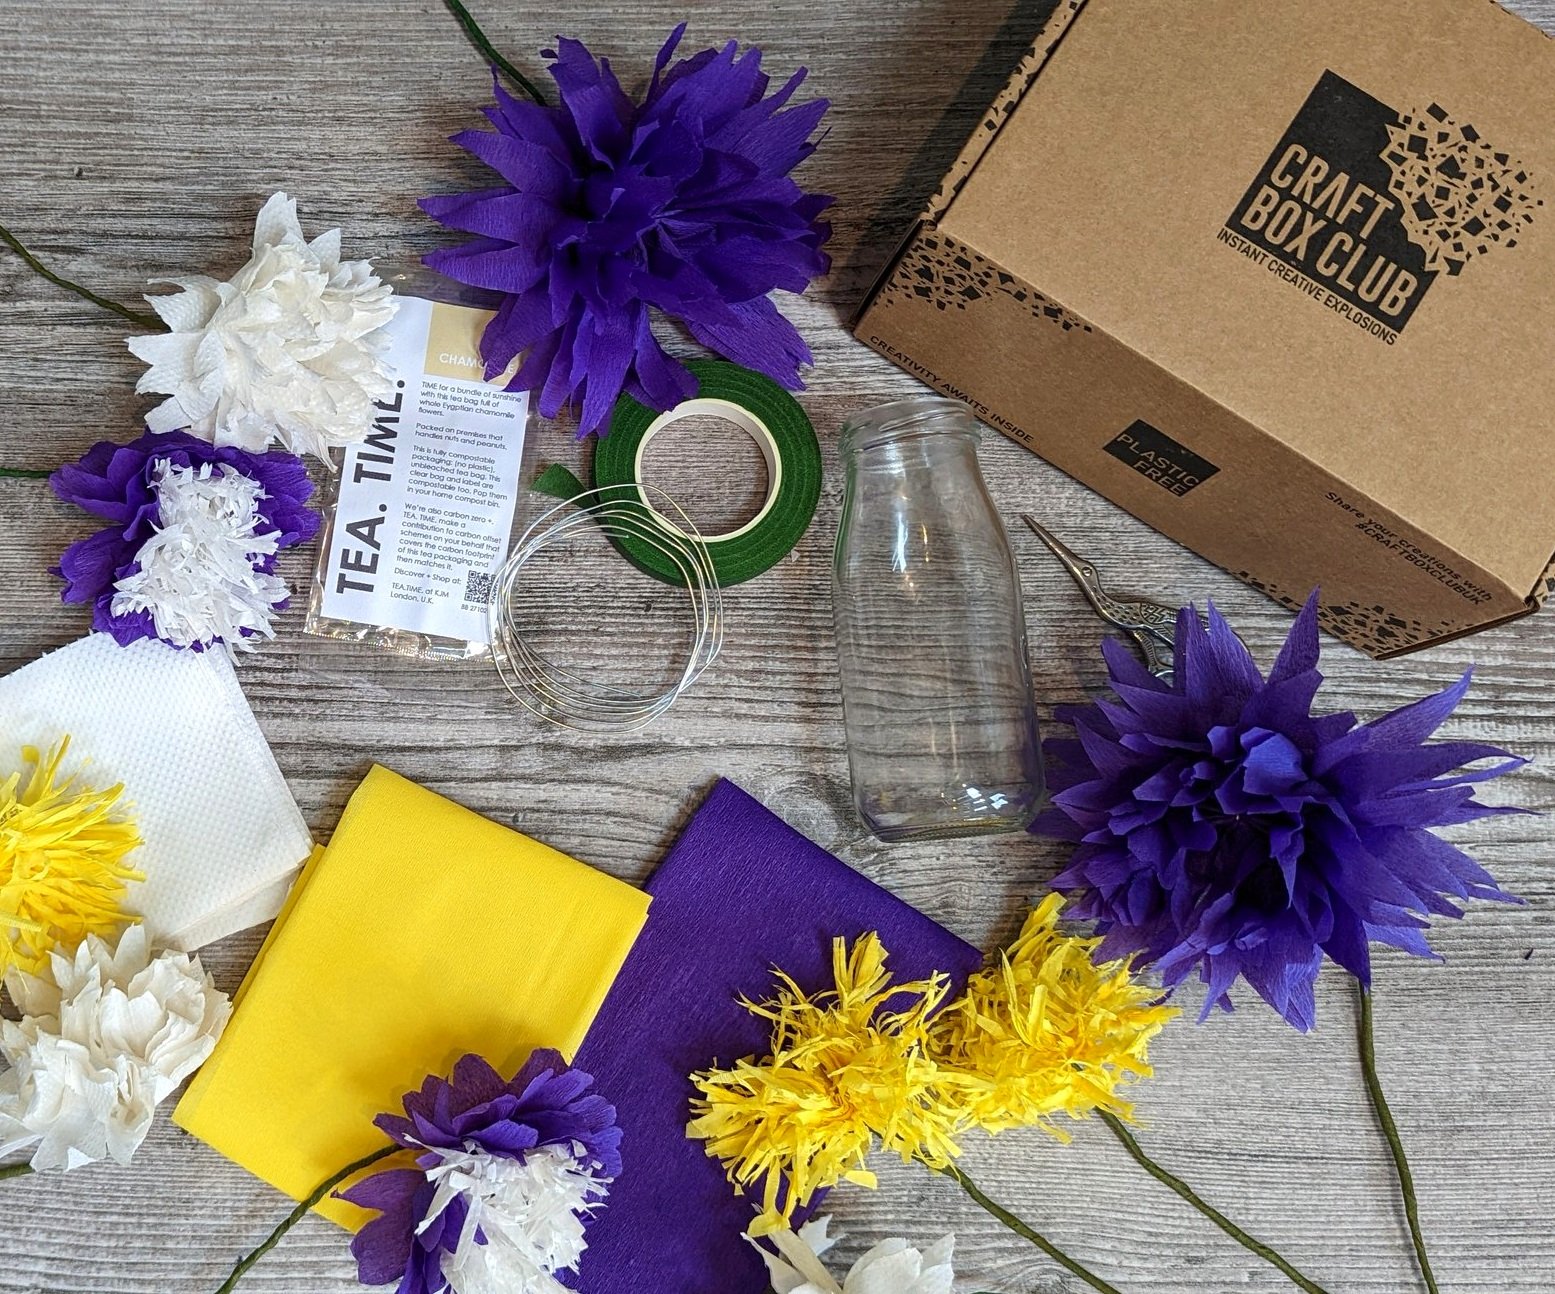 Paper flower craft kit — Craft Box Club